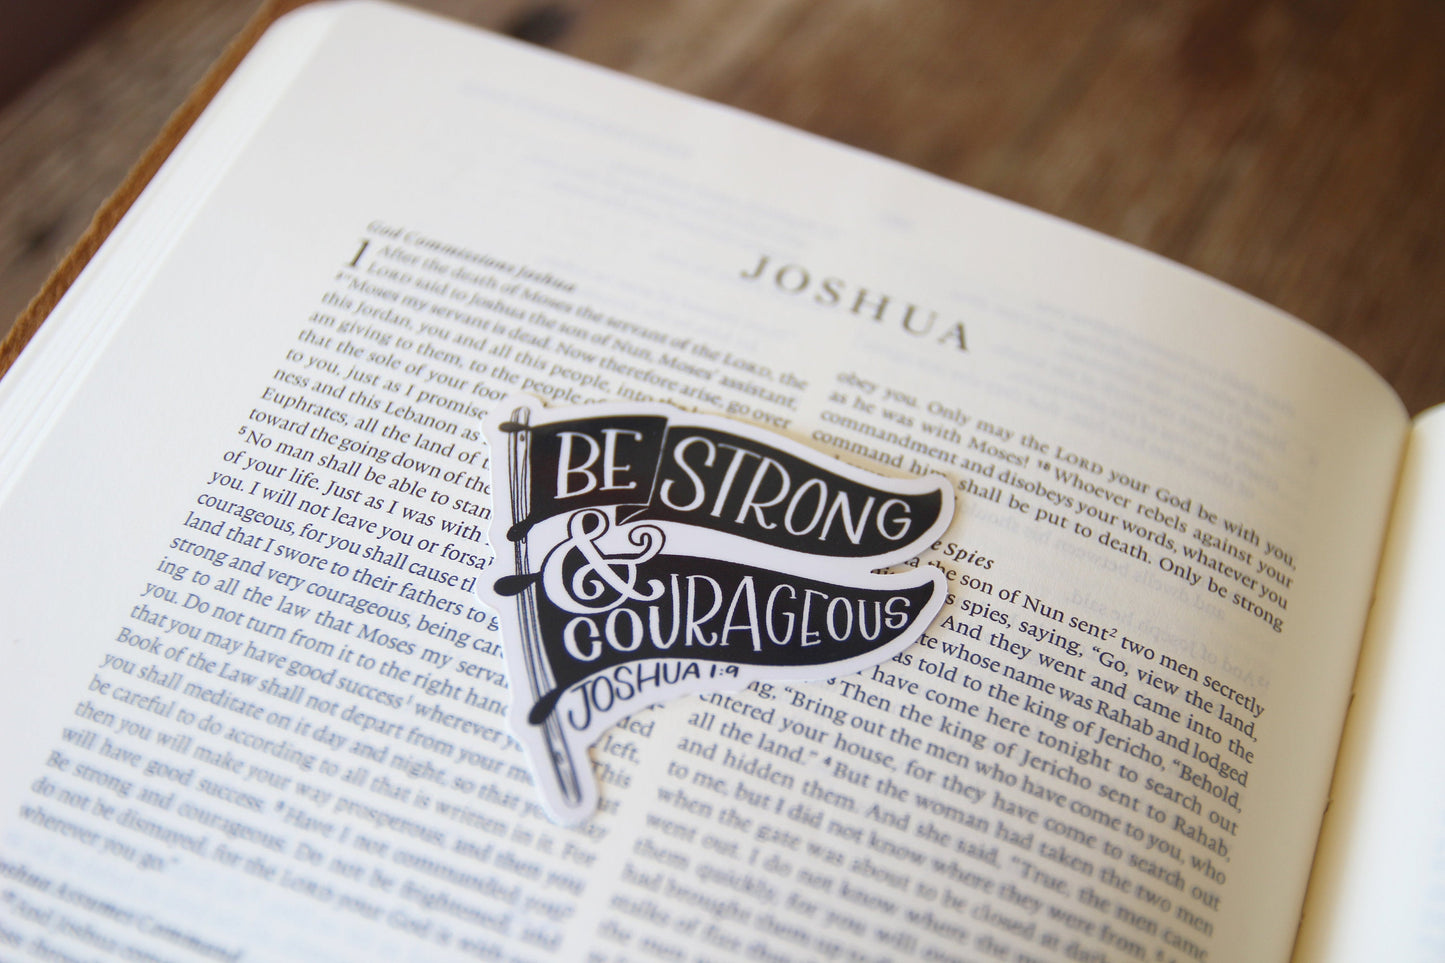 Joshua 1:9 Sticker